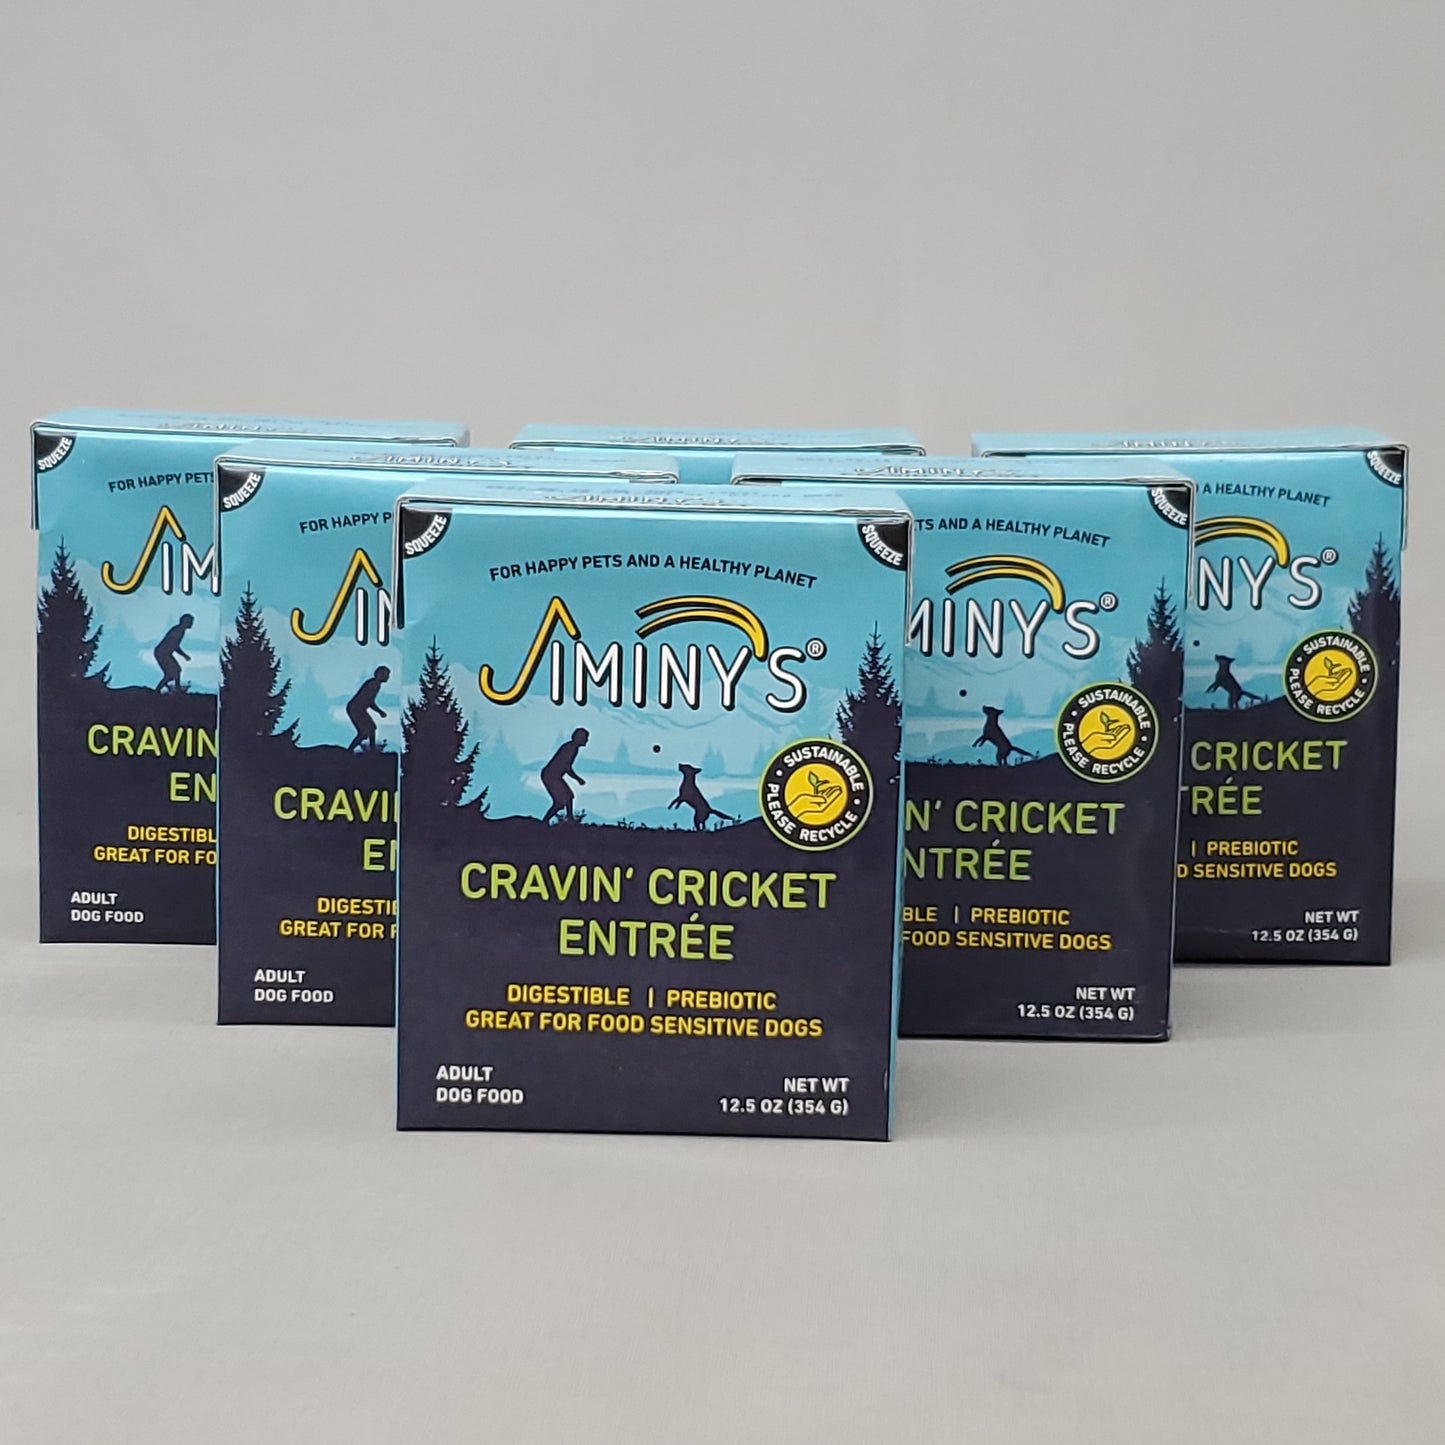 JIMINY'S 6-PACK! Cravin Cricket Entree Wet Adult Dog Food 12.5 oz Digestible Prebiotic for Sensitive Dogs (7/24)